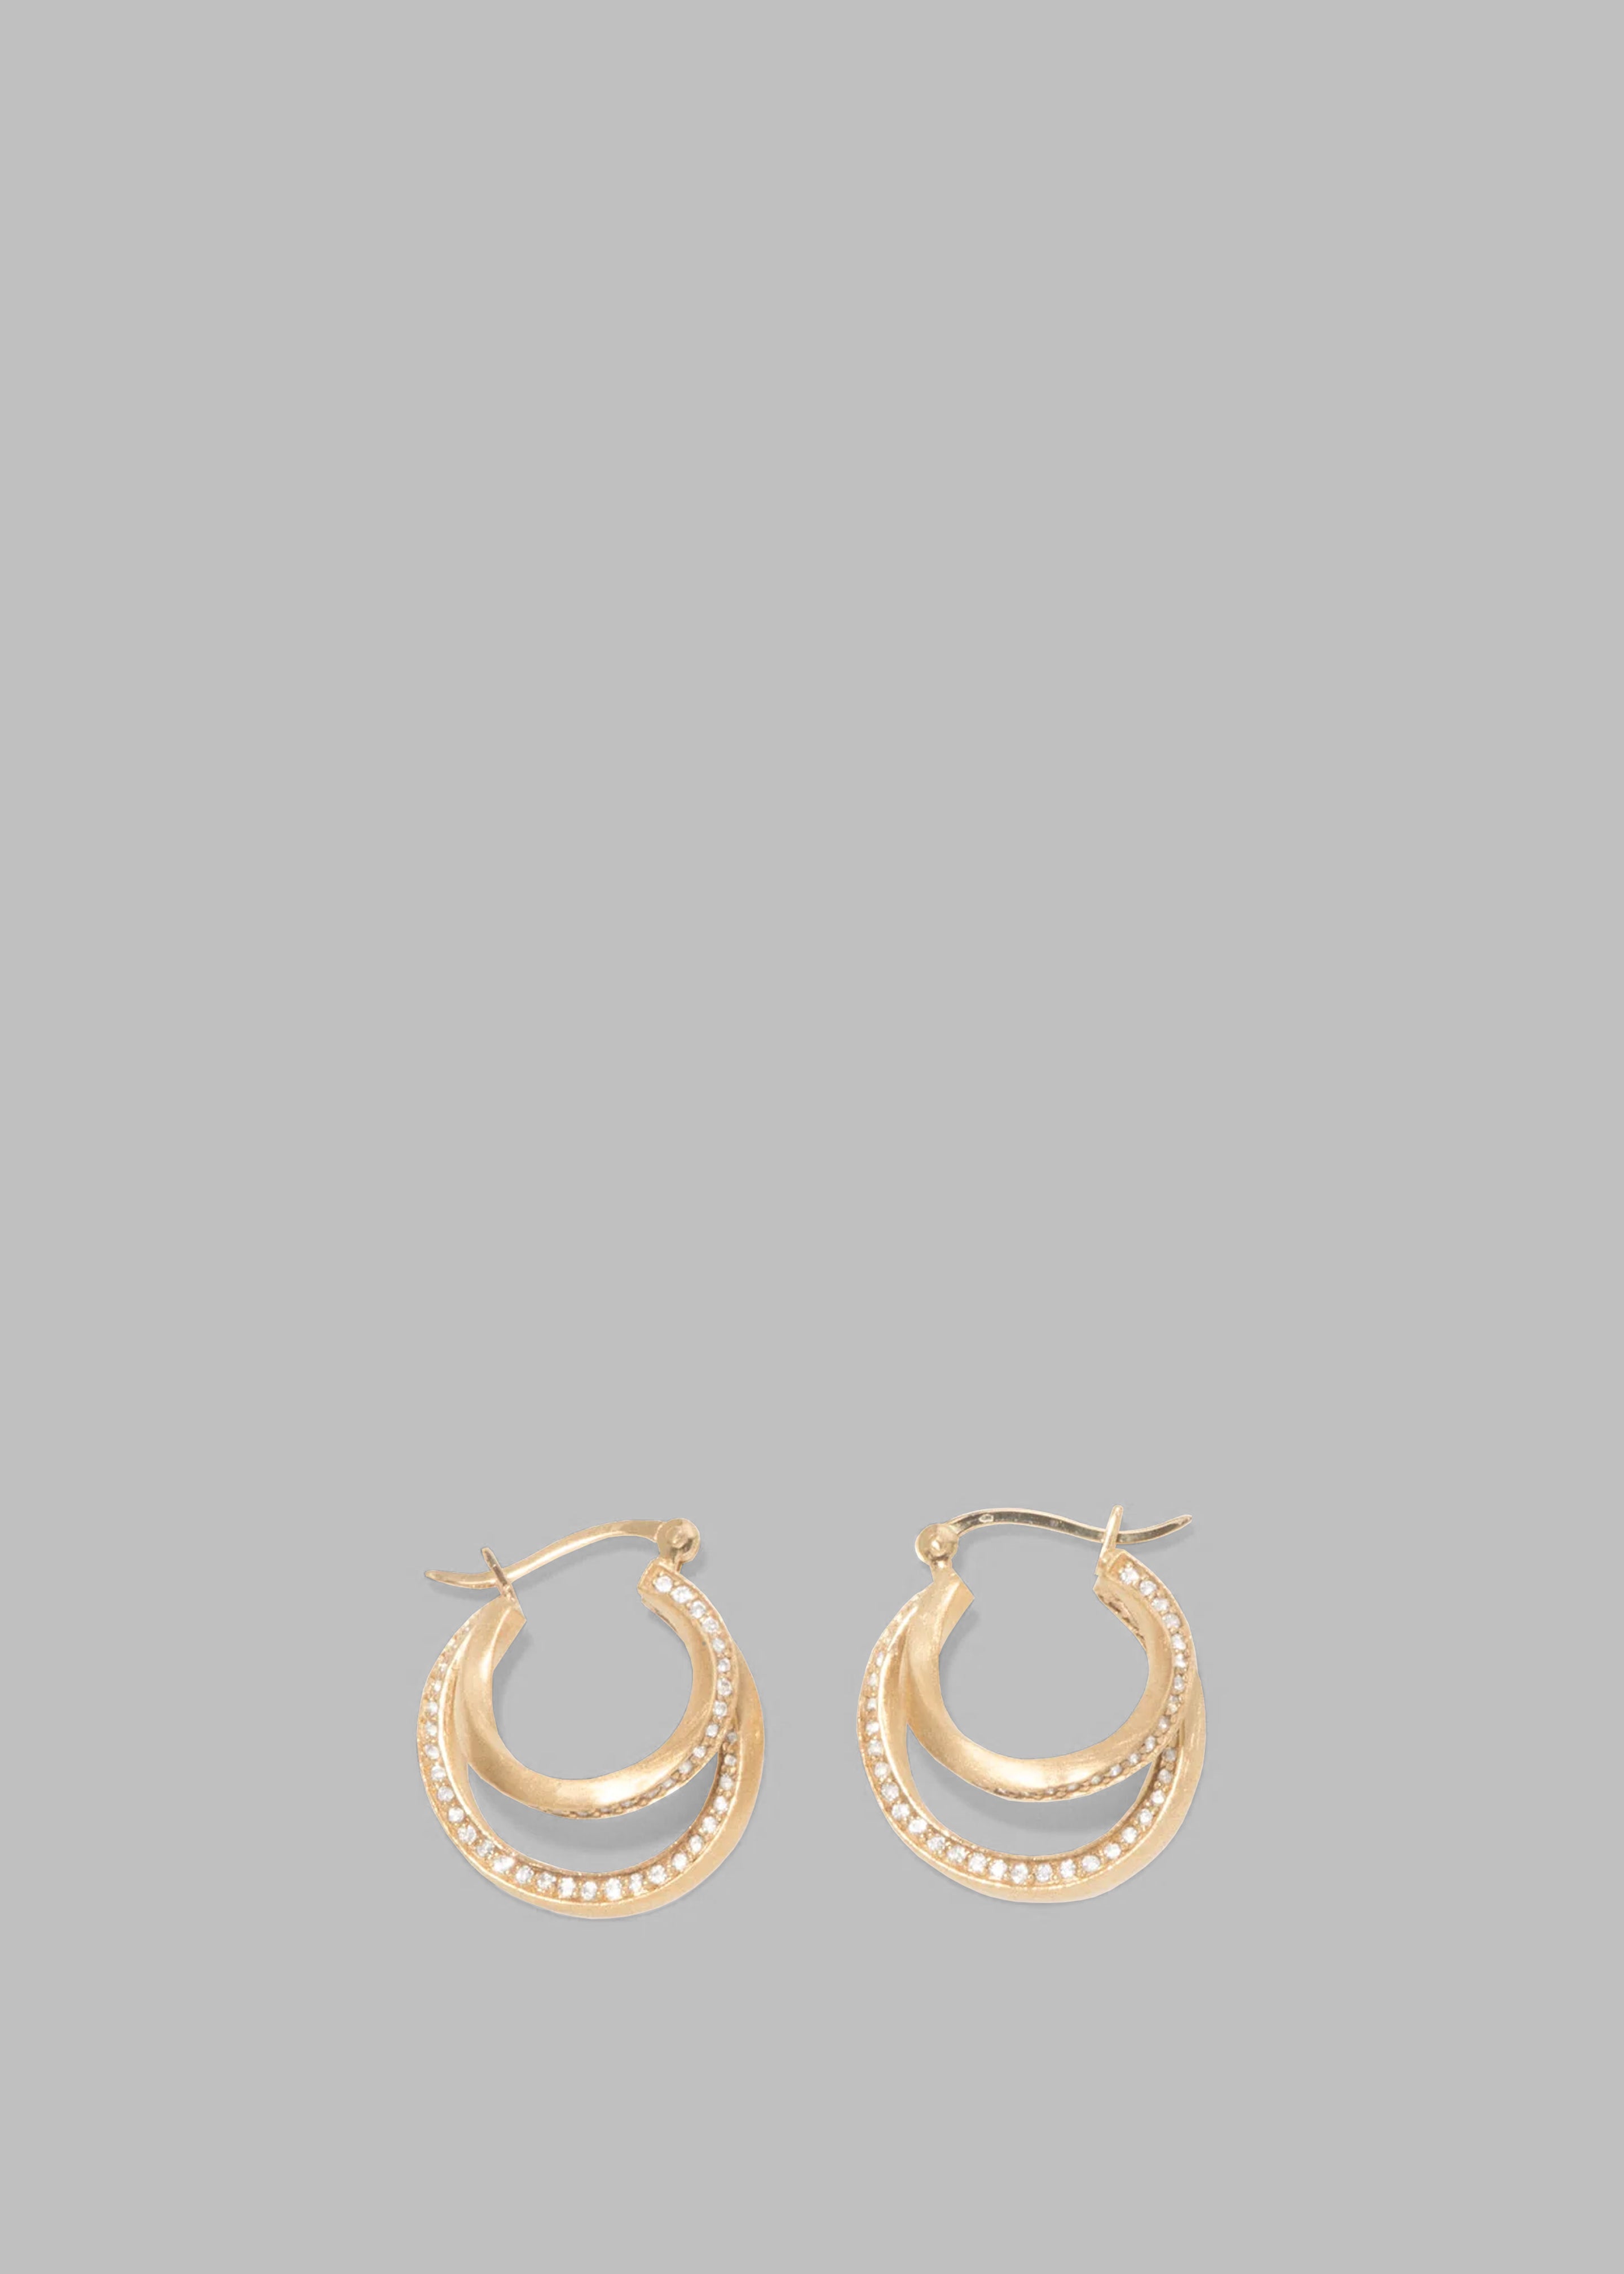 Completedworks Suburbs Earrings - Gold Vermeil - 4